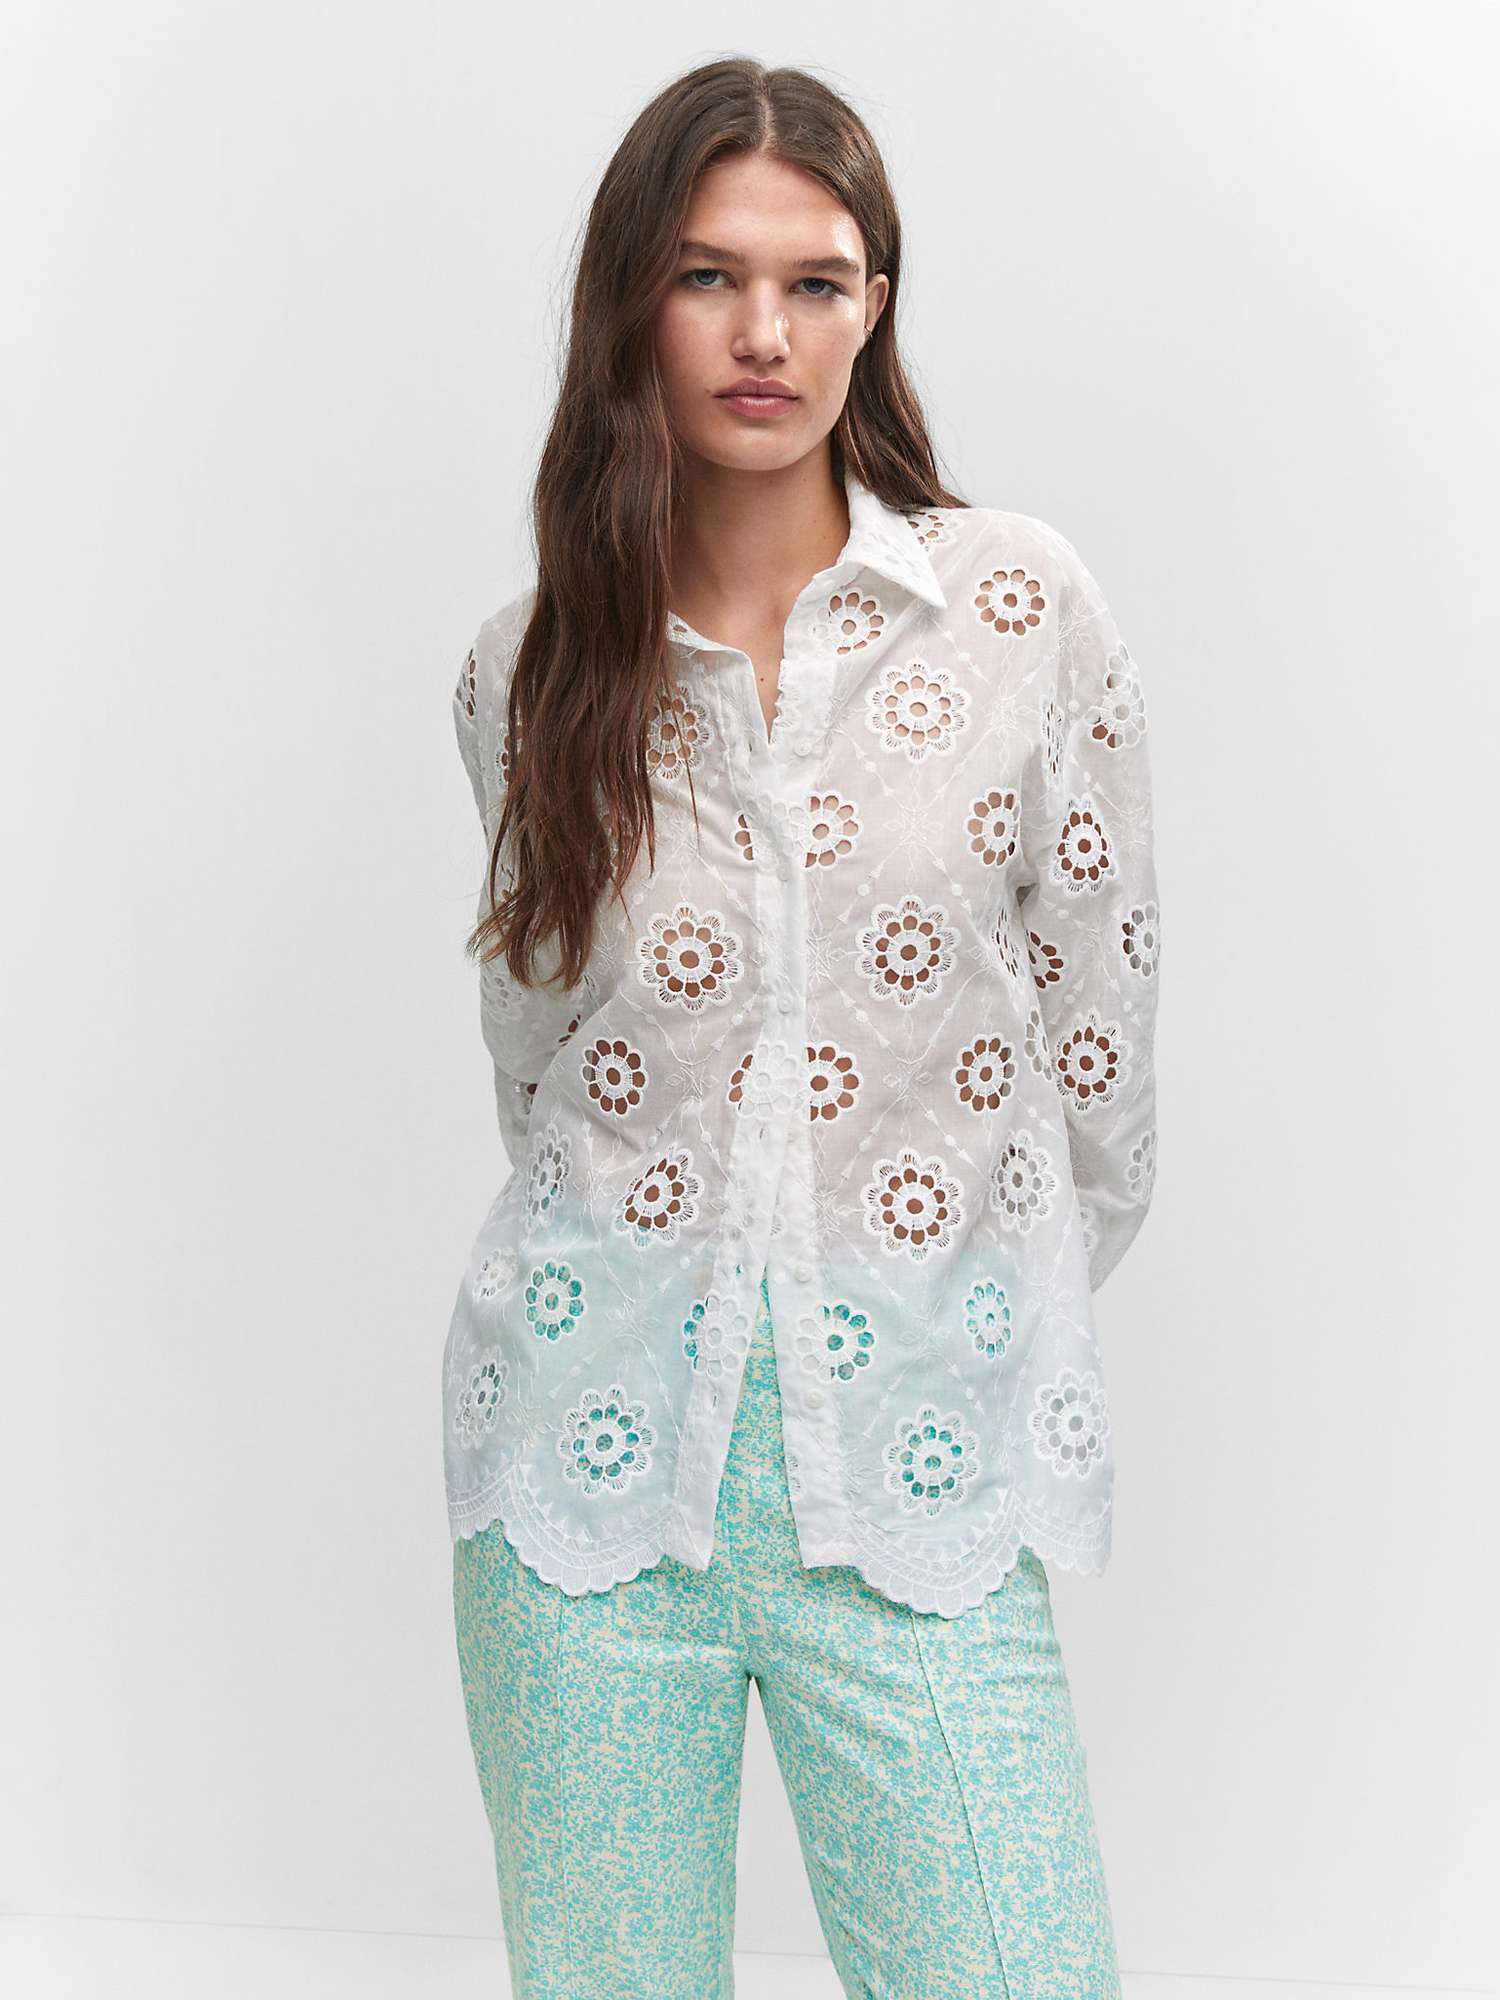 Mango Capri Embroidered Shirt, White at John Lewis & Partners